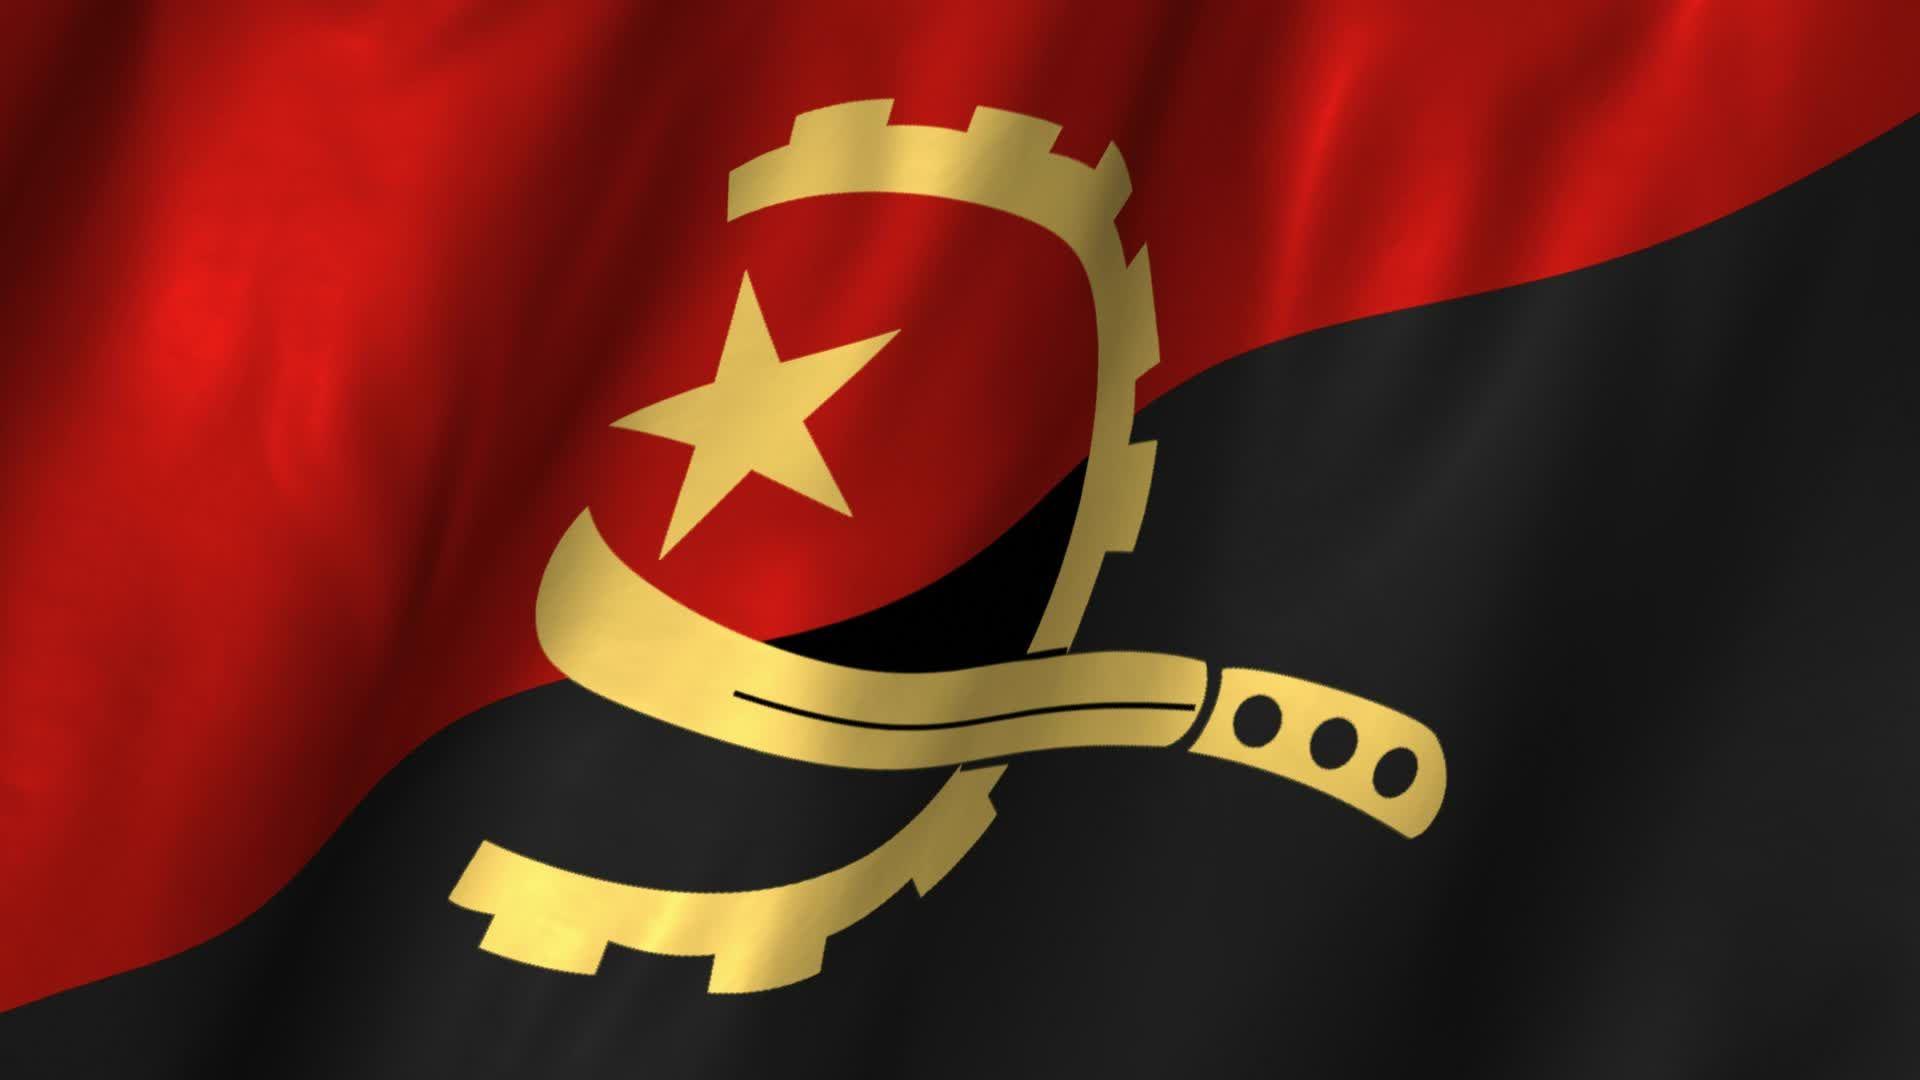 Angola Flag Image